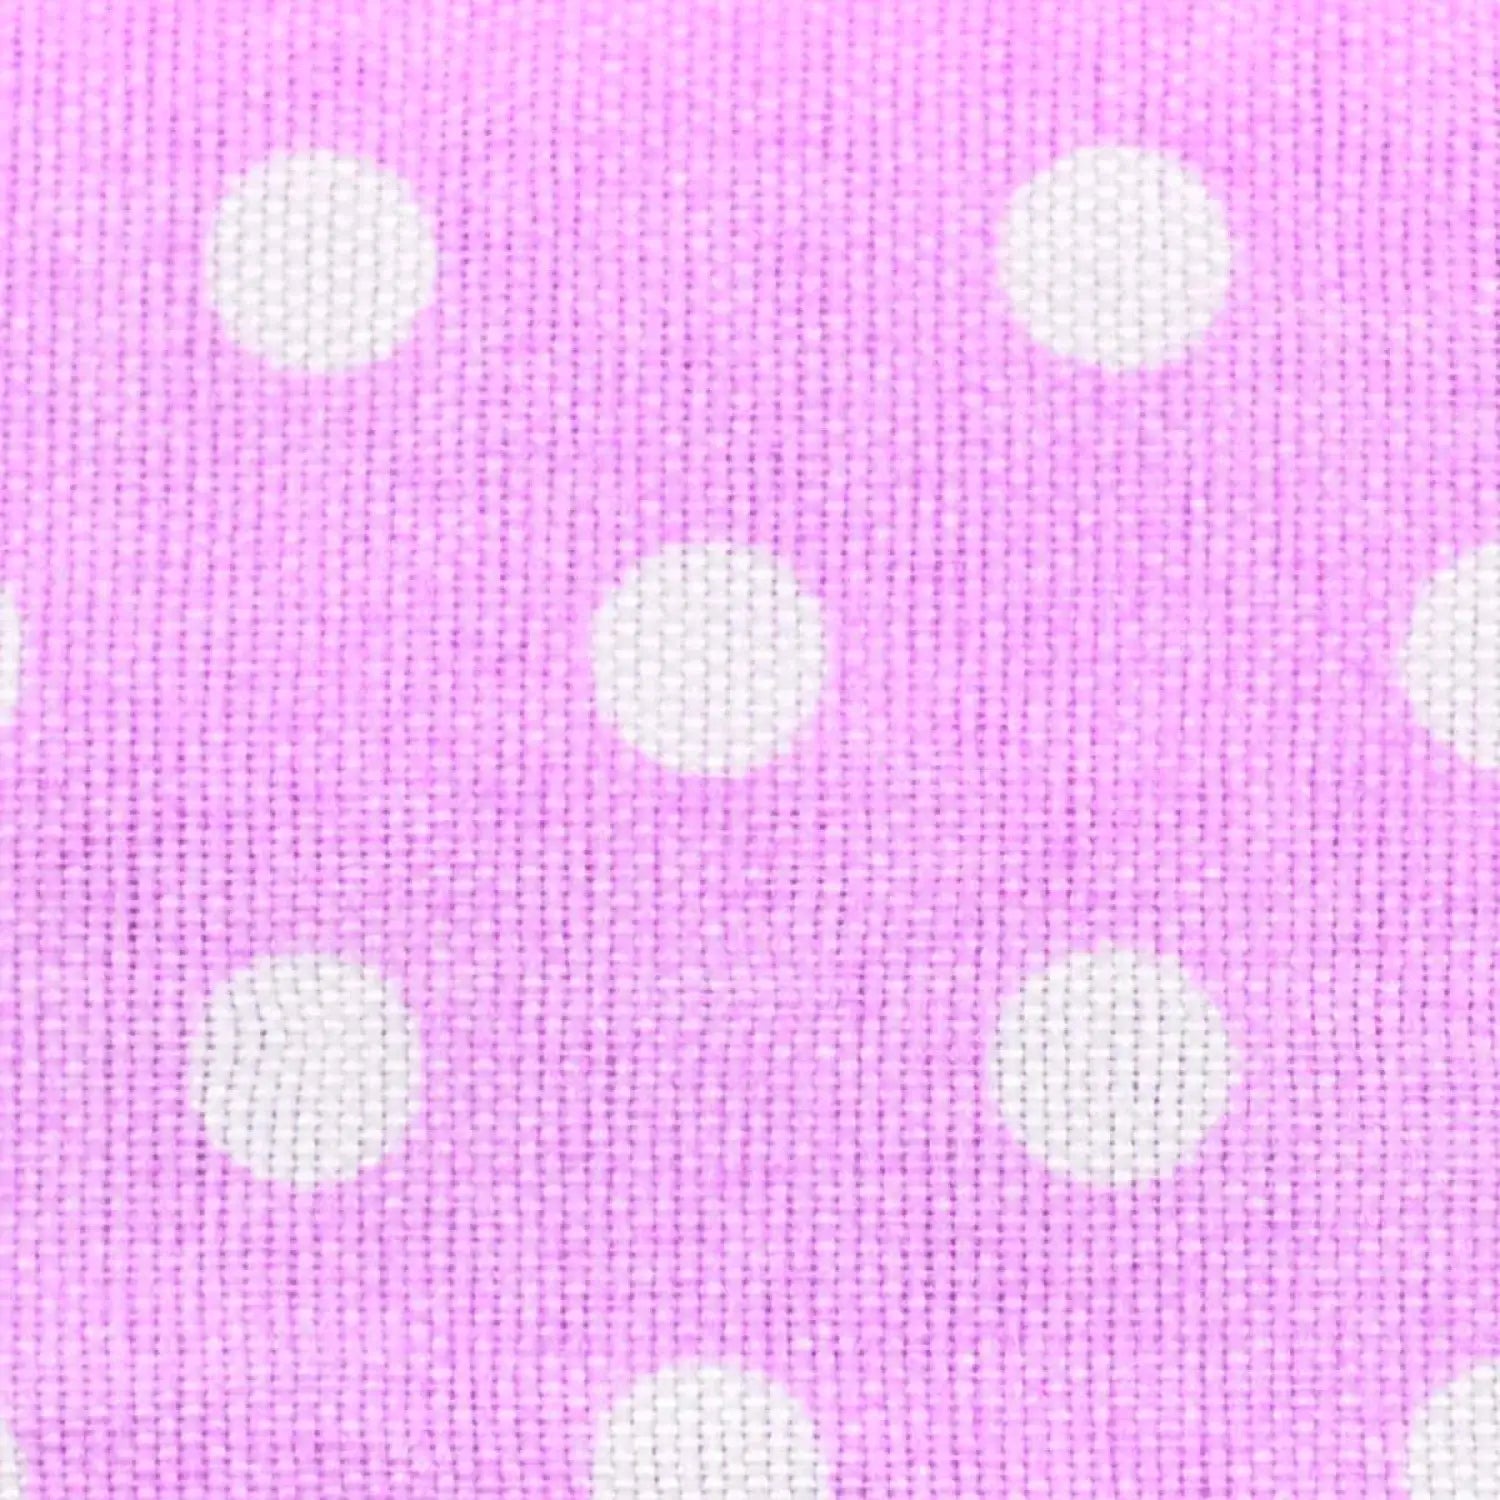 Pink and white polka dot fabric on Bunny Ears Retro Polka Dot Wire Headband